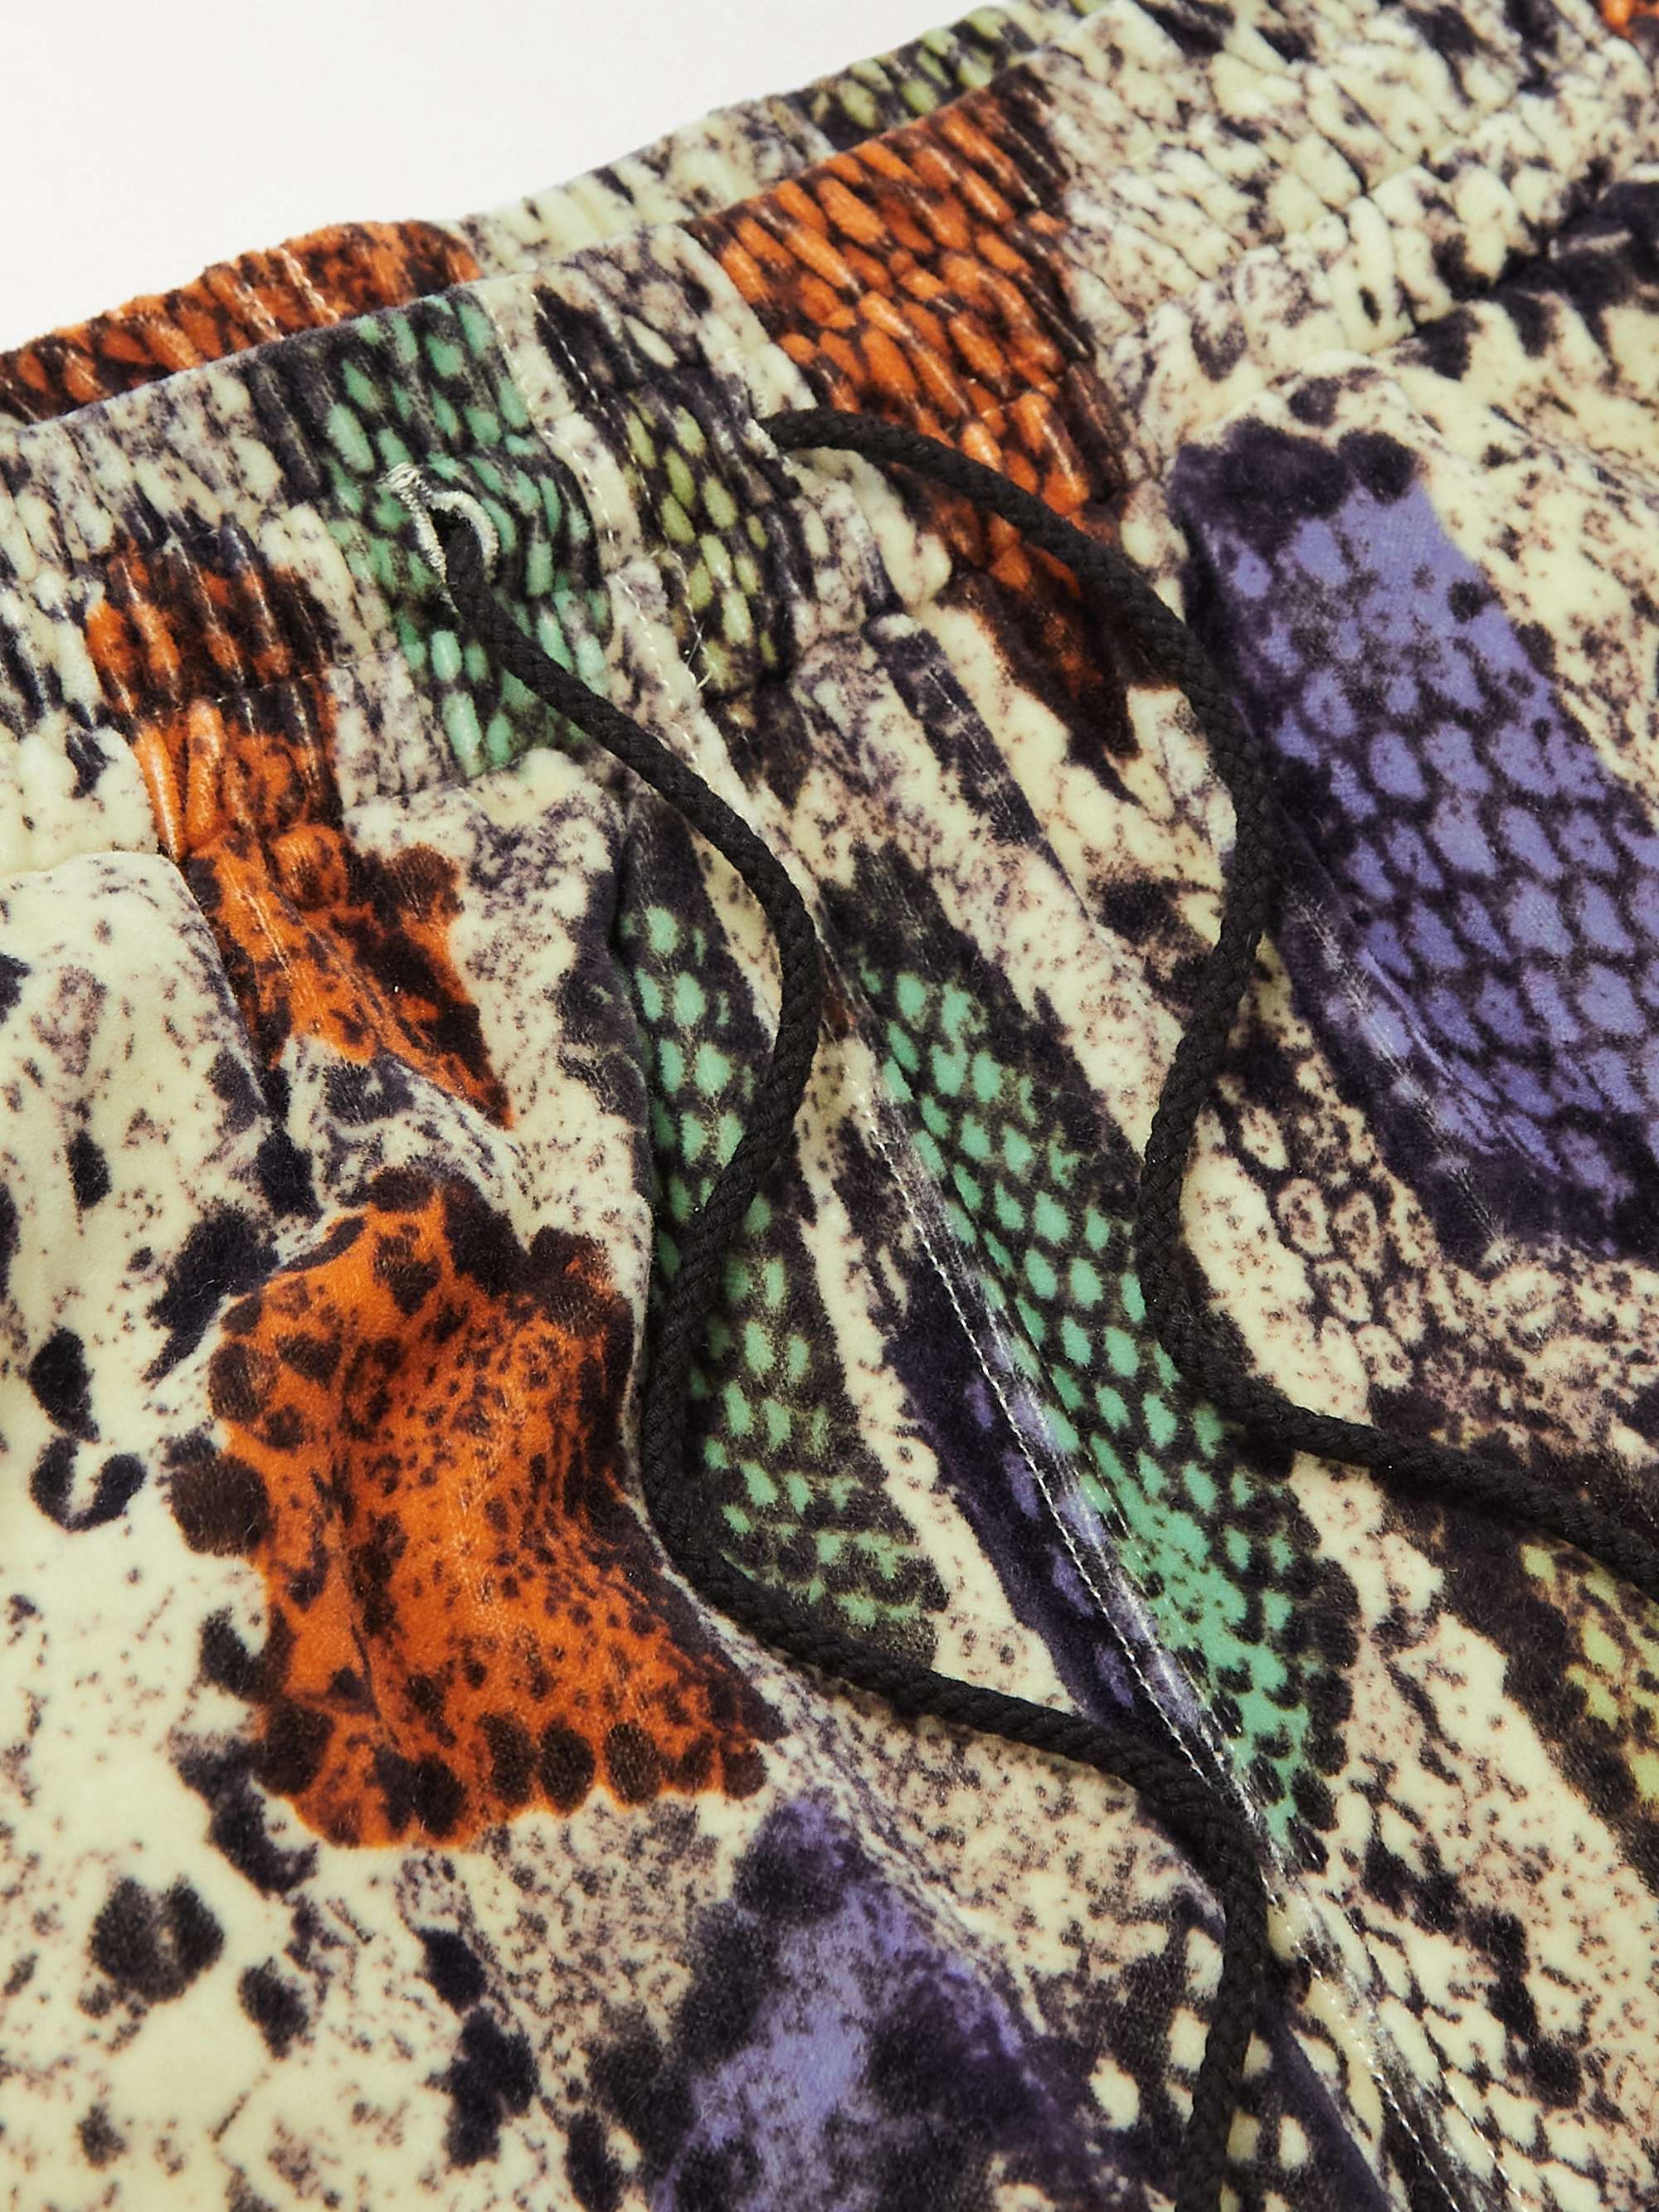 WACKO MARIA Tapered Snake-Print Cotton-Velvet Sweatpants